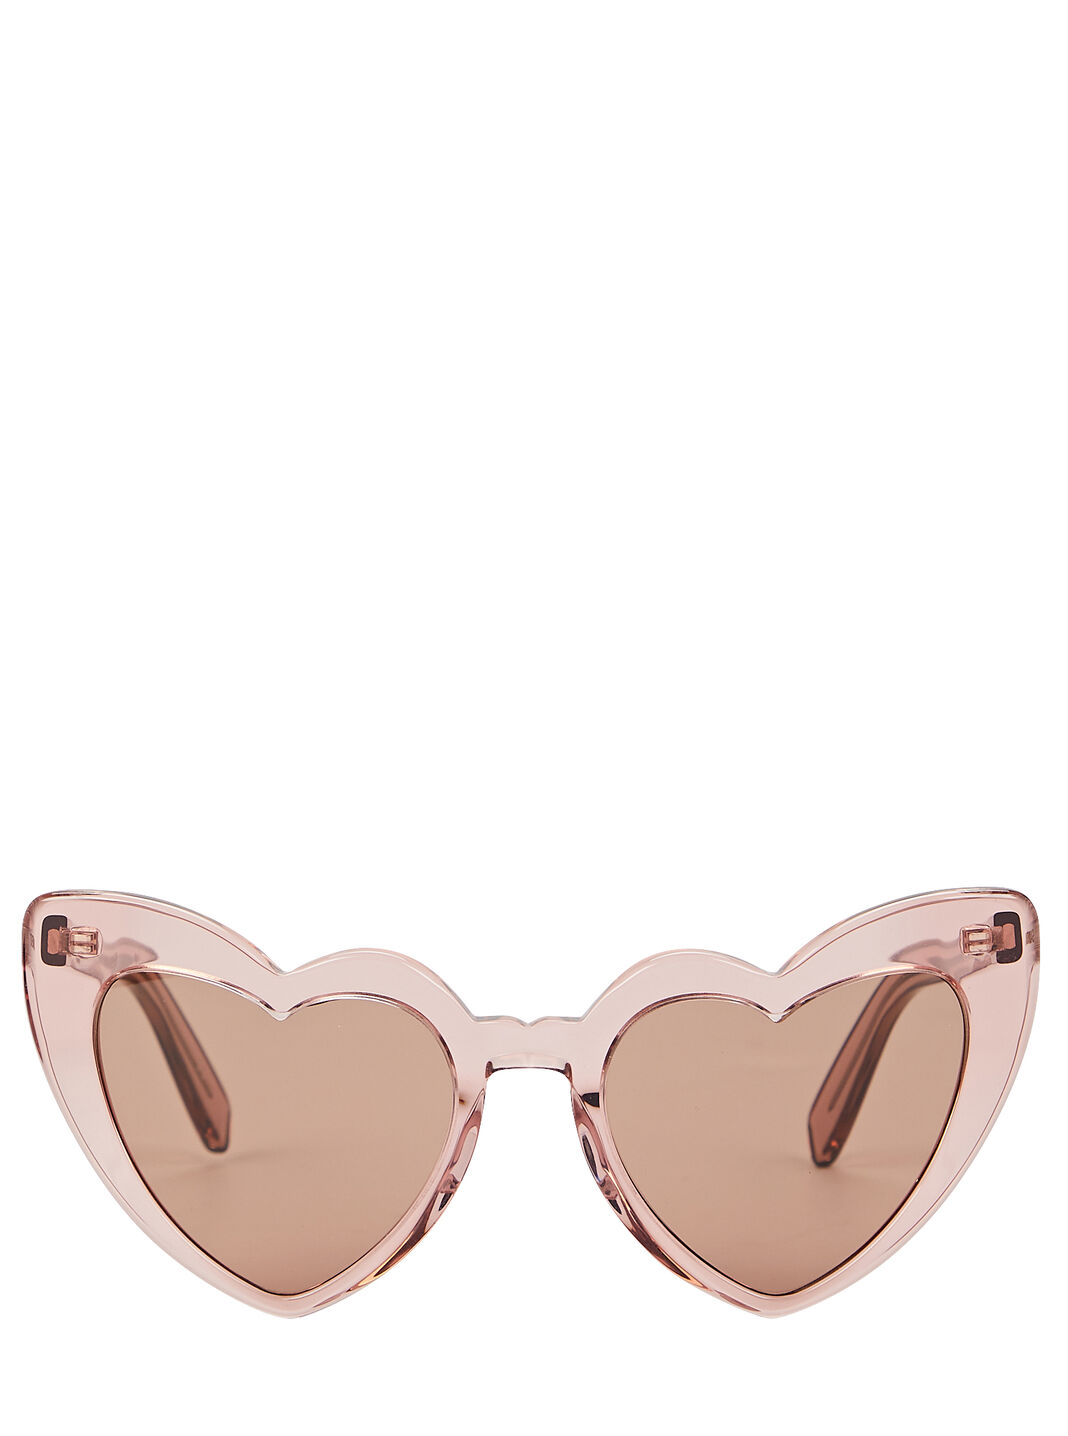 Loulou Heart-Shaped Sunglasses